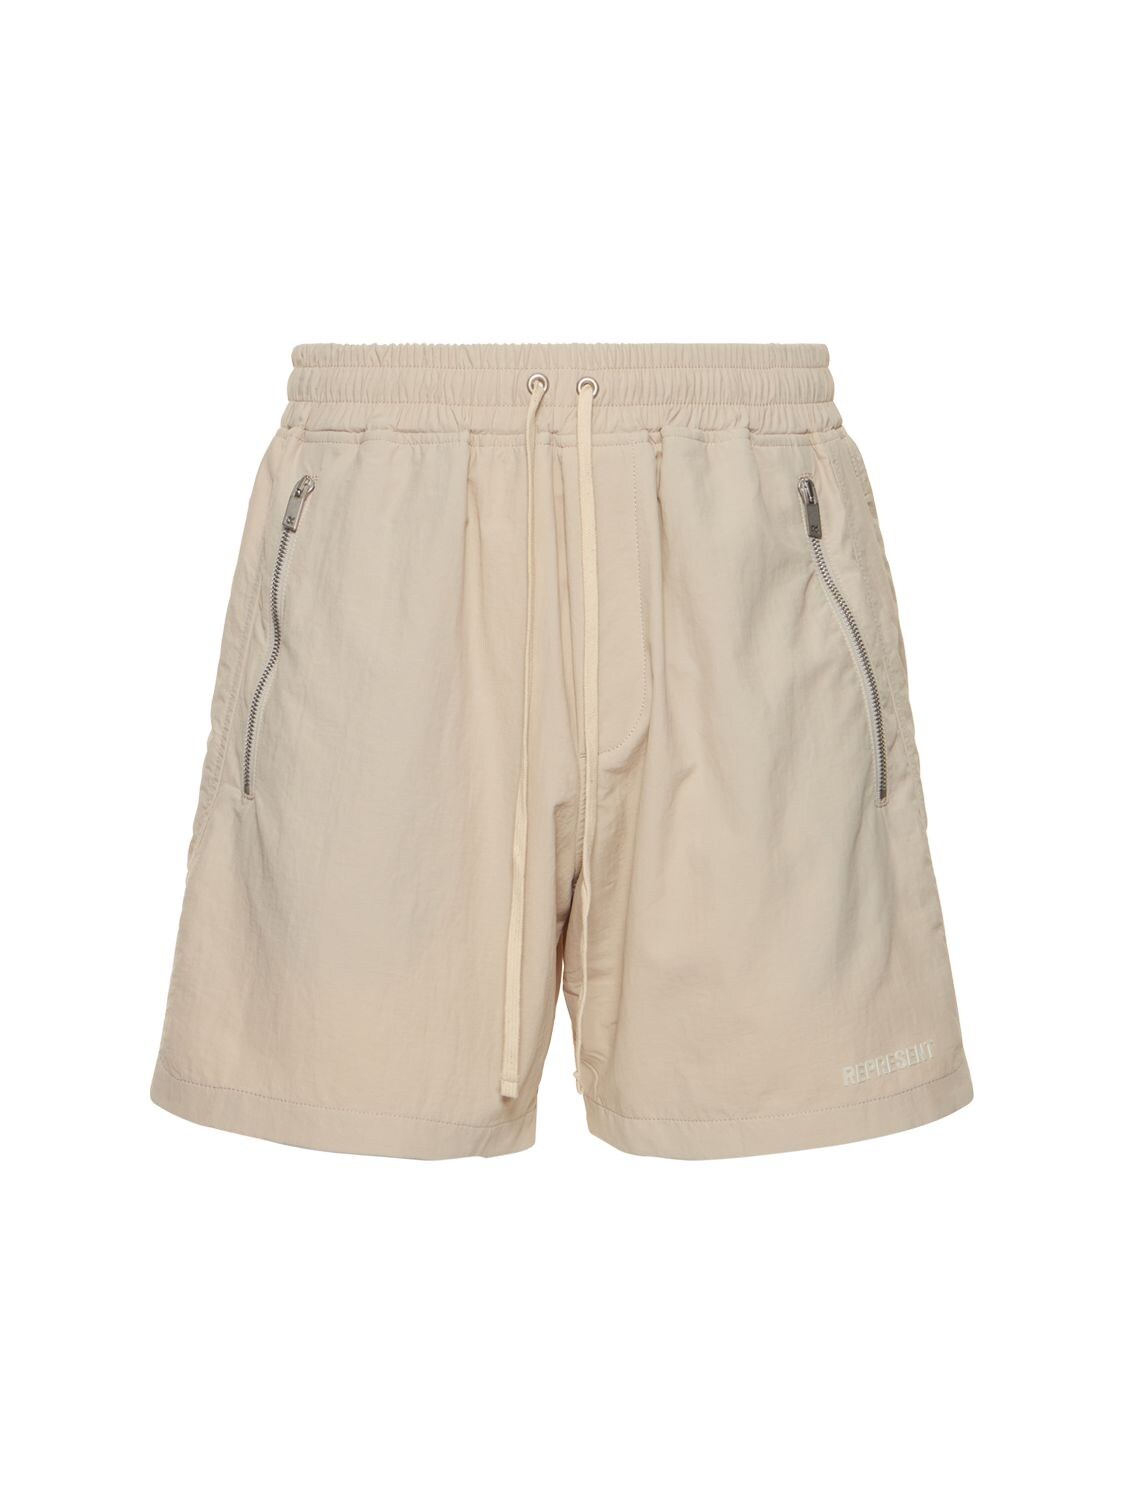 Represent Nylon Shorts In Concrete | ModeSens